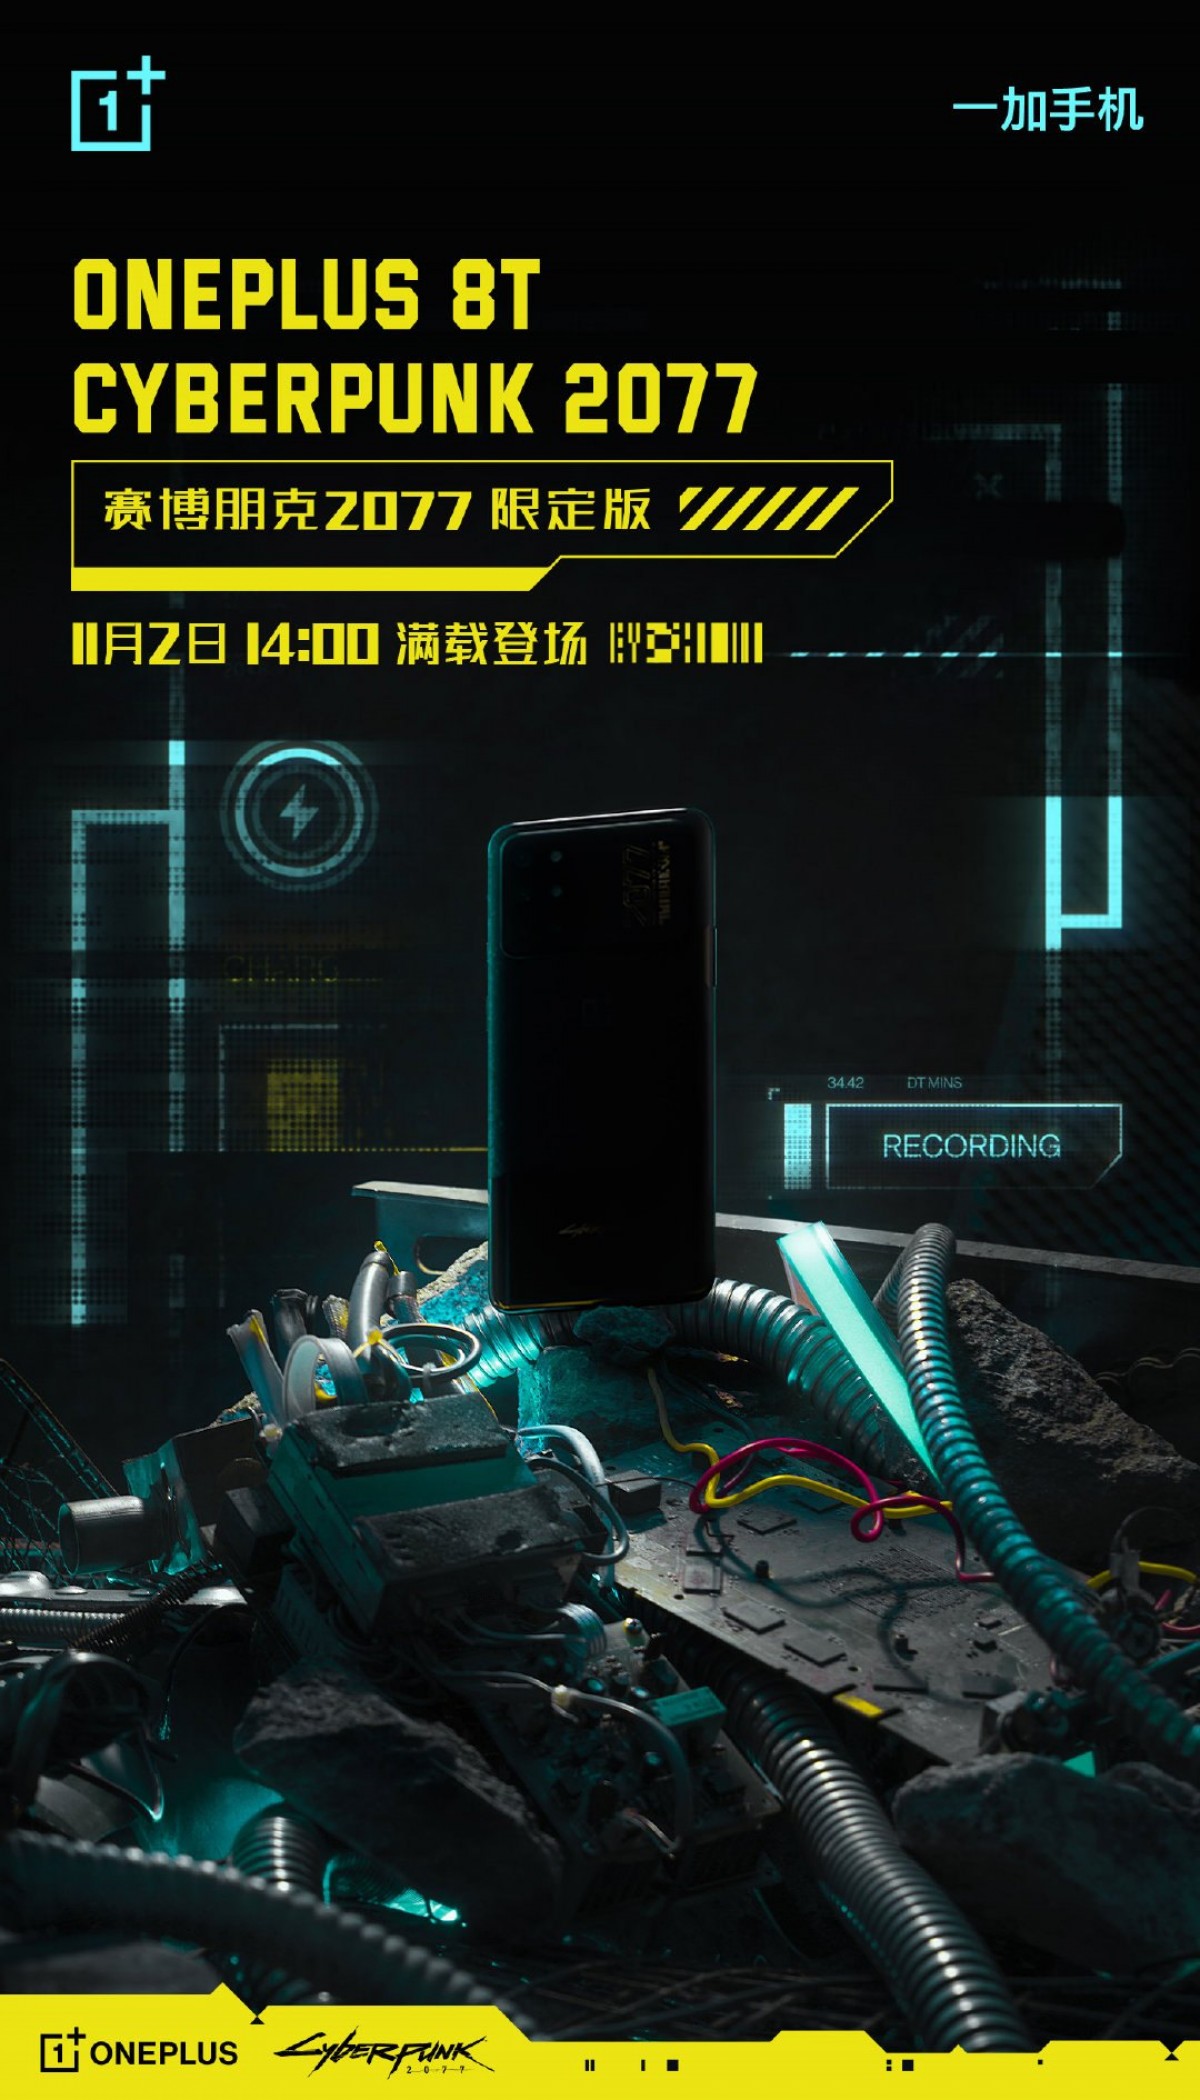 OnePlus 8T Cyberpunk 2077 Edition burlado